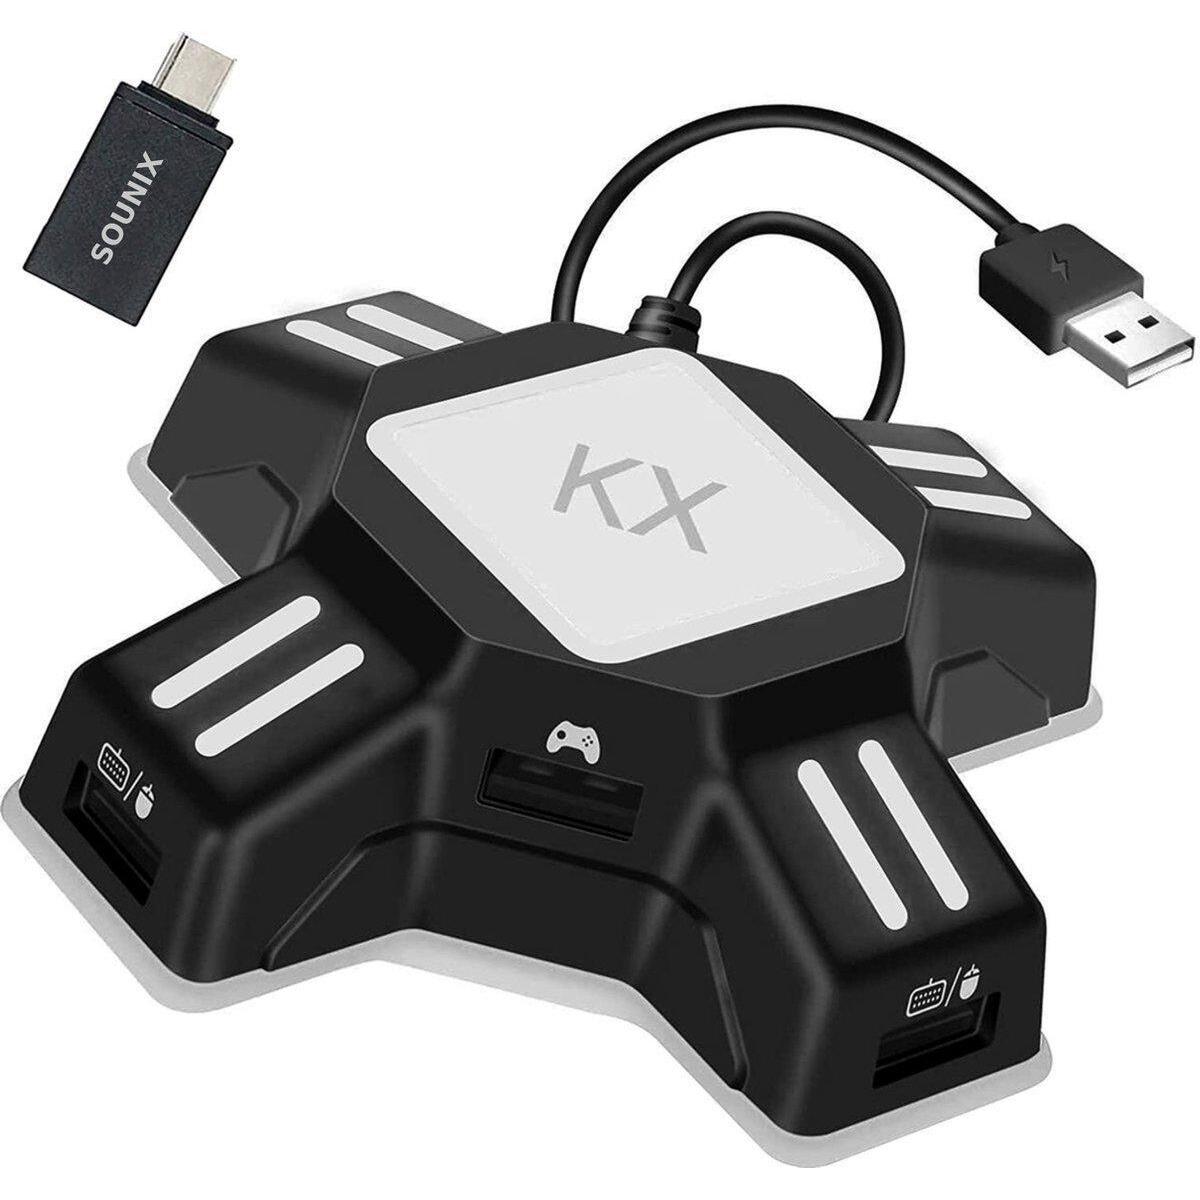 Kolibrie atleet Email Gaming Toetsenbord en Muis USB Adapter - Sounix kopen - €16.99